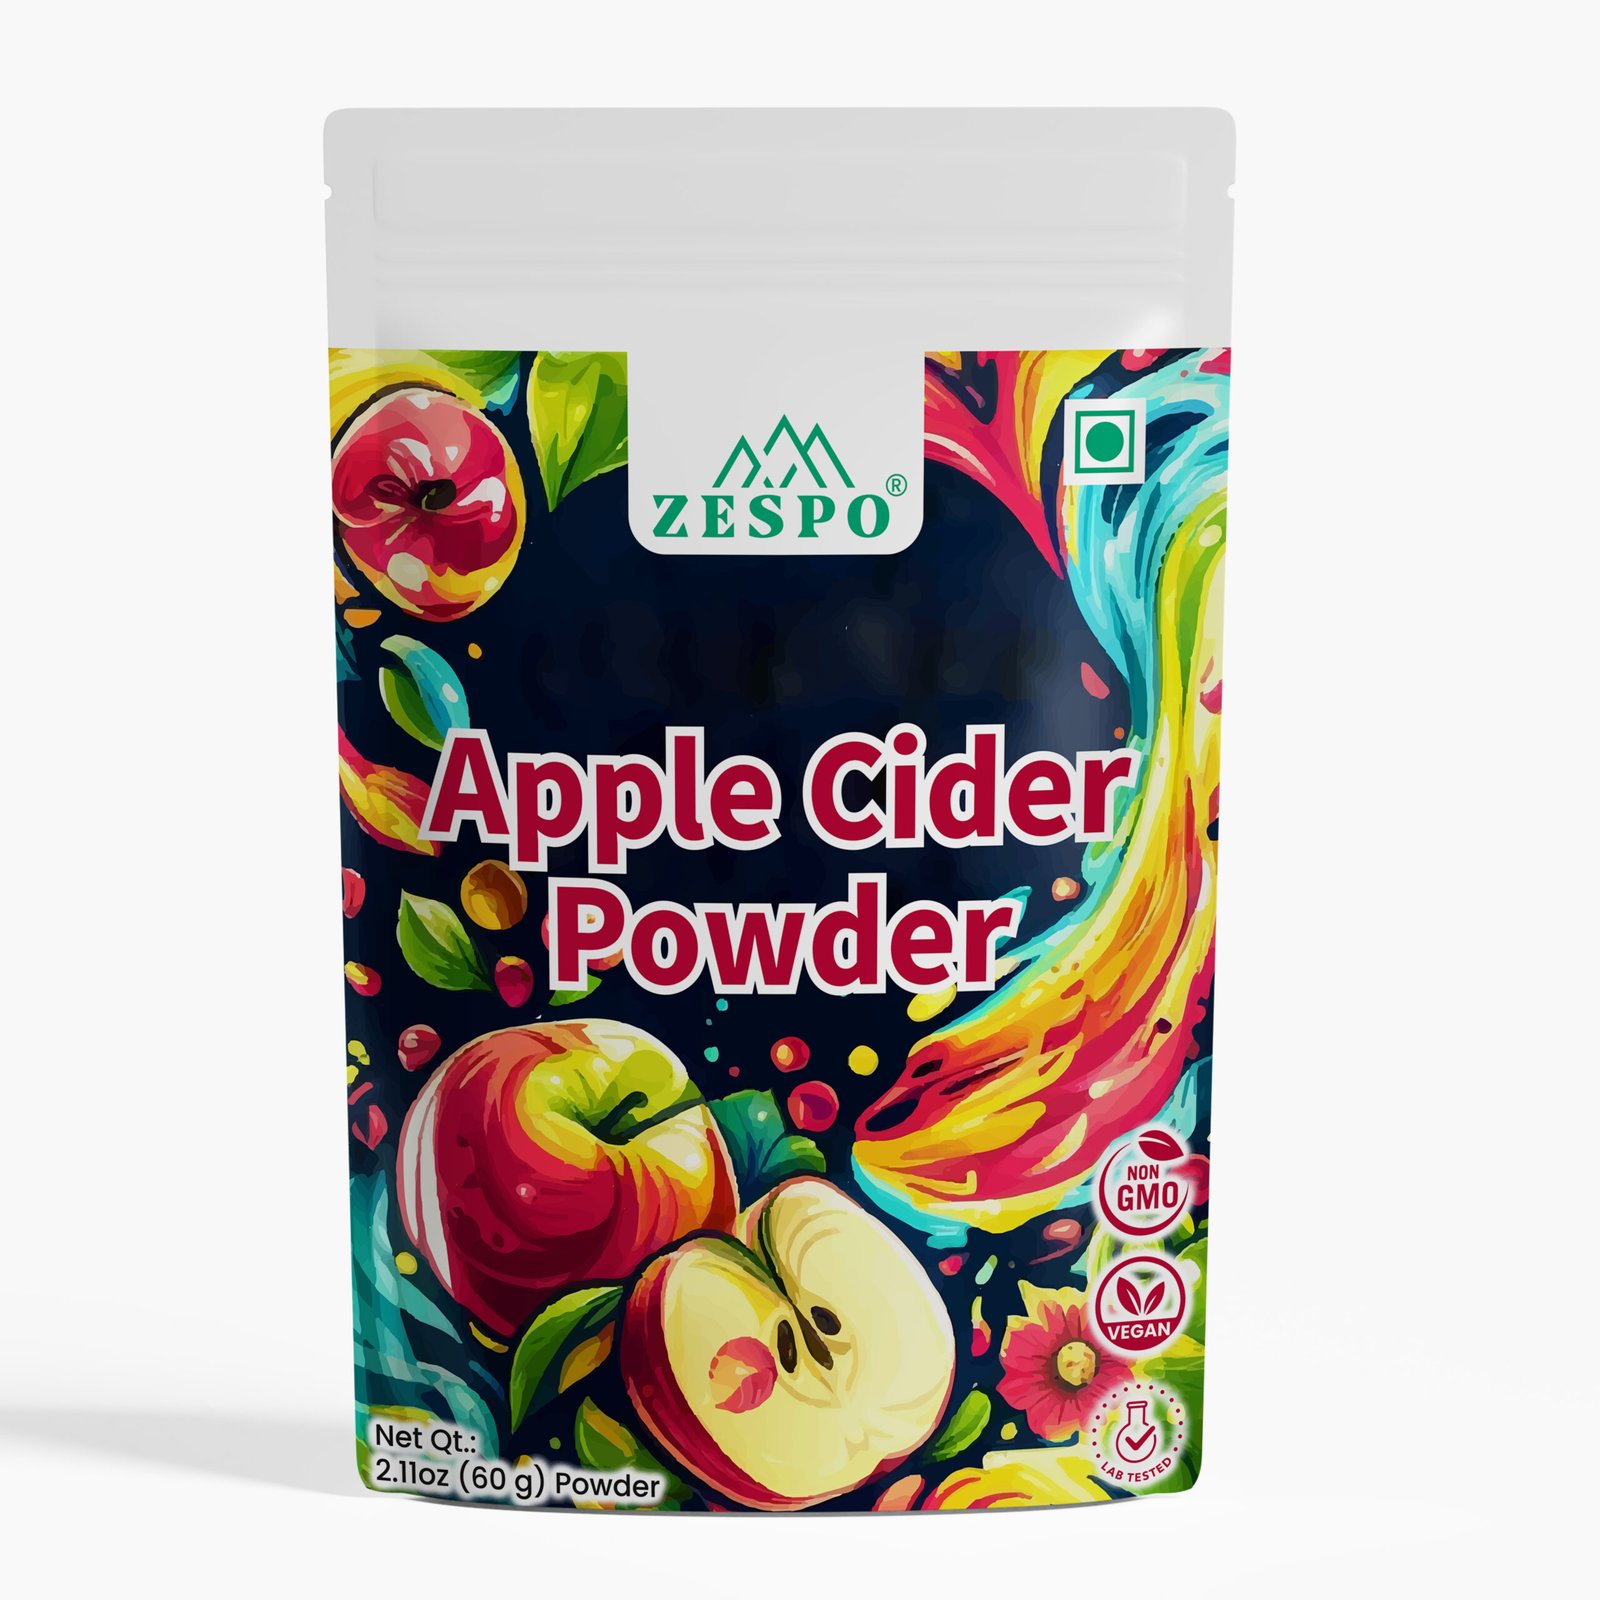 Apple cider powder